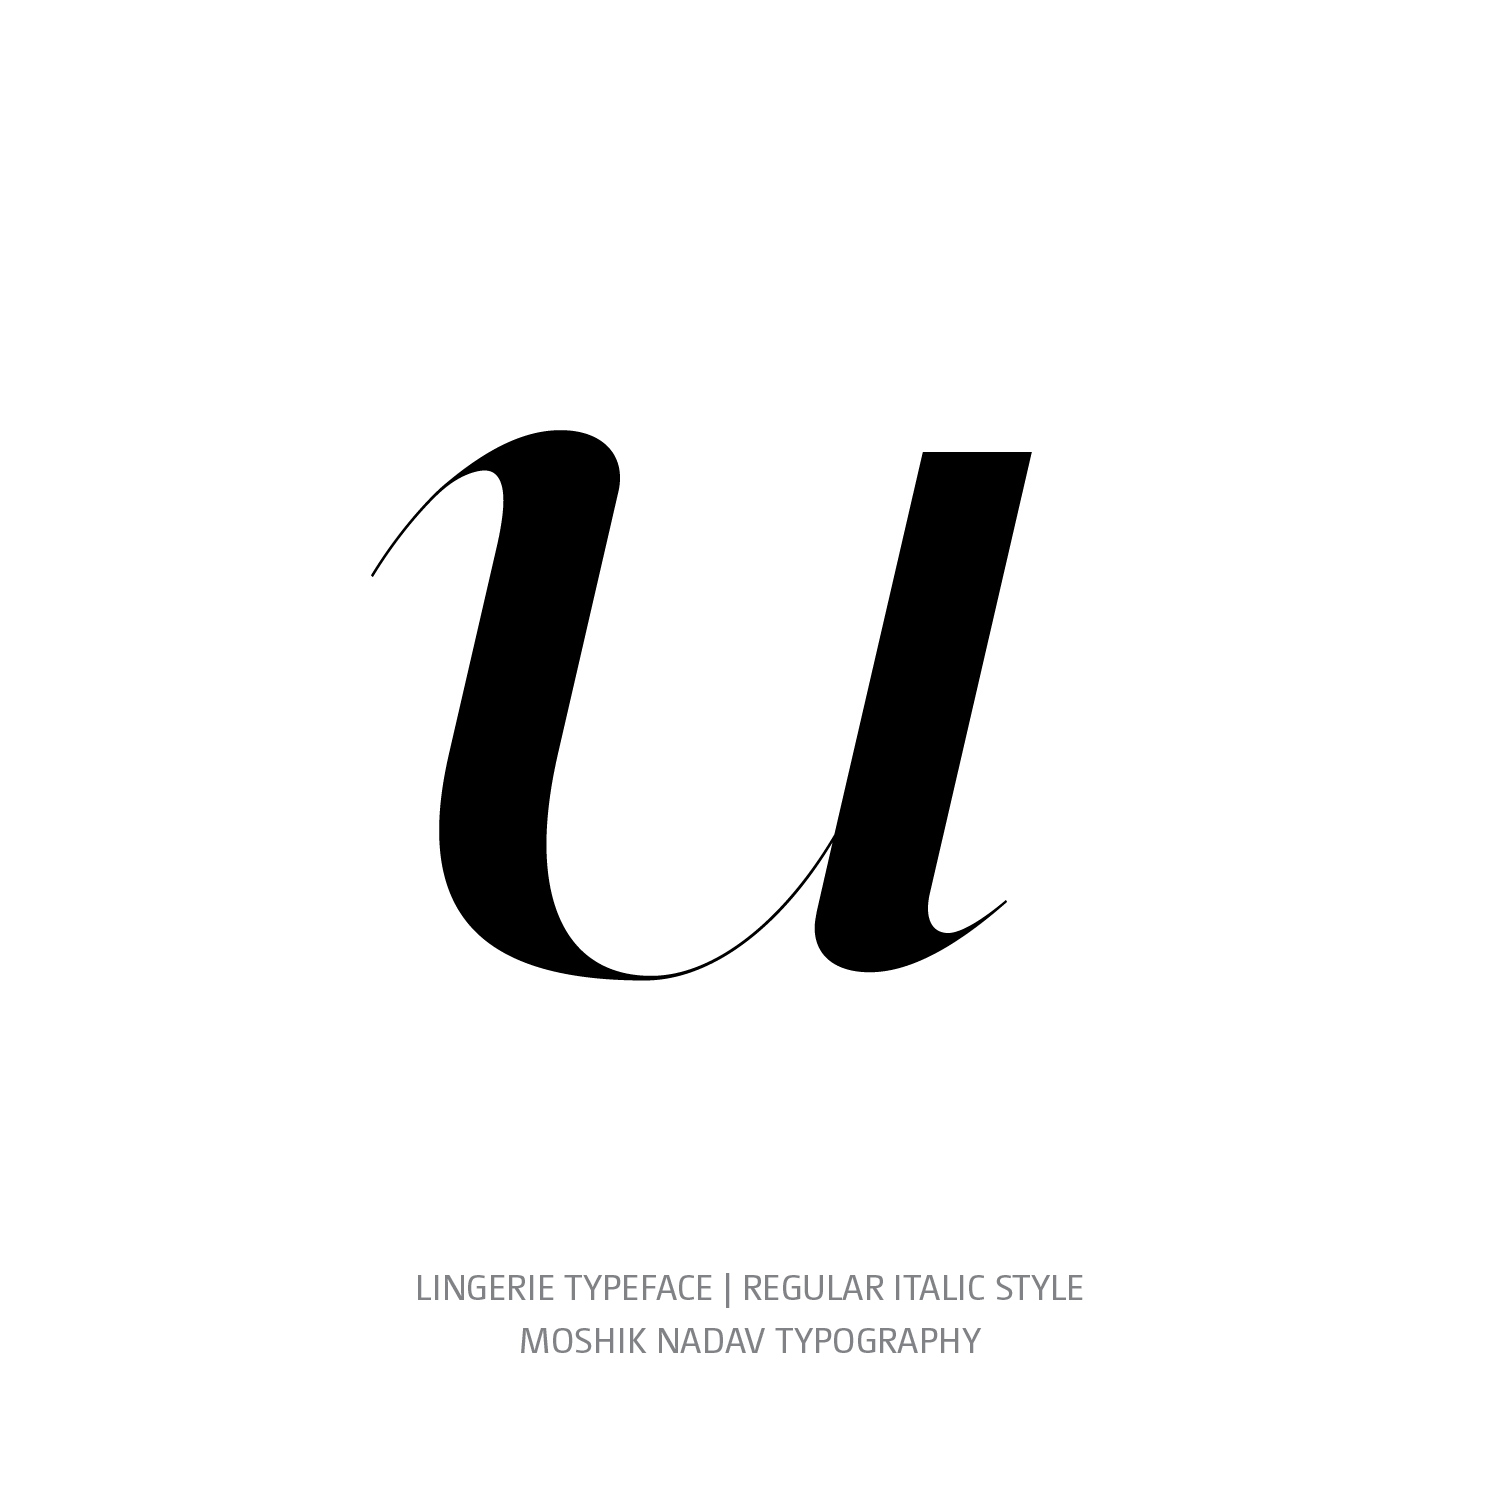 Lingerie Typeface Regular Italic u - Fashion fonts by Moshik Nadav Typography